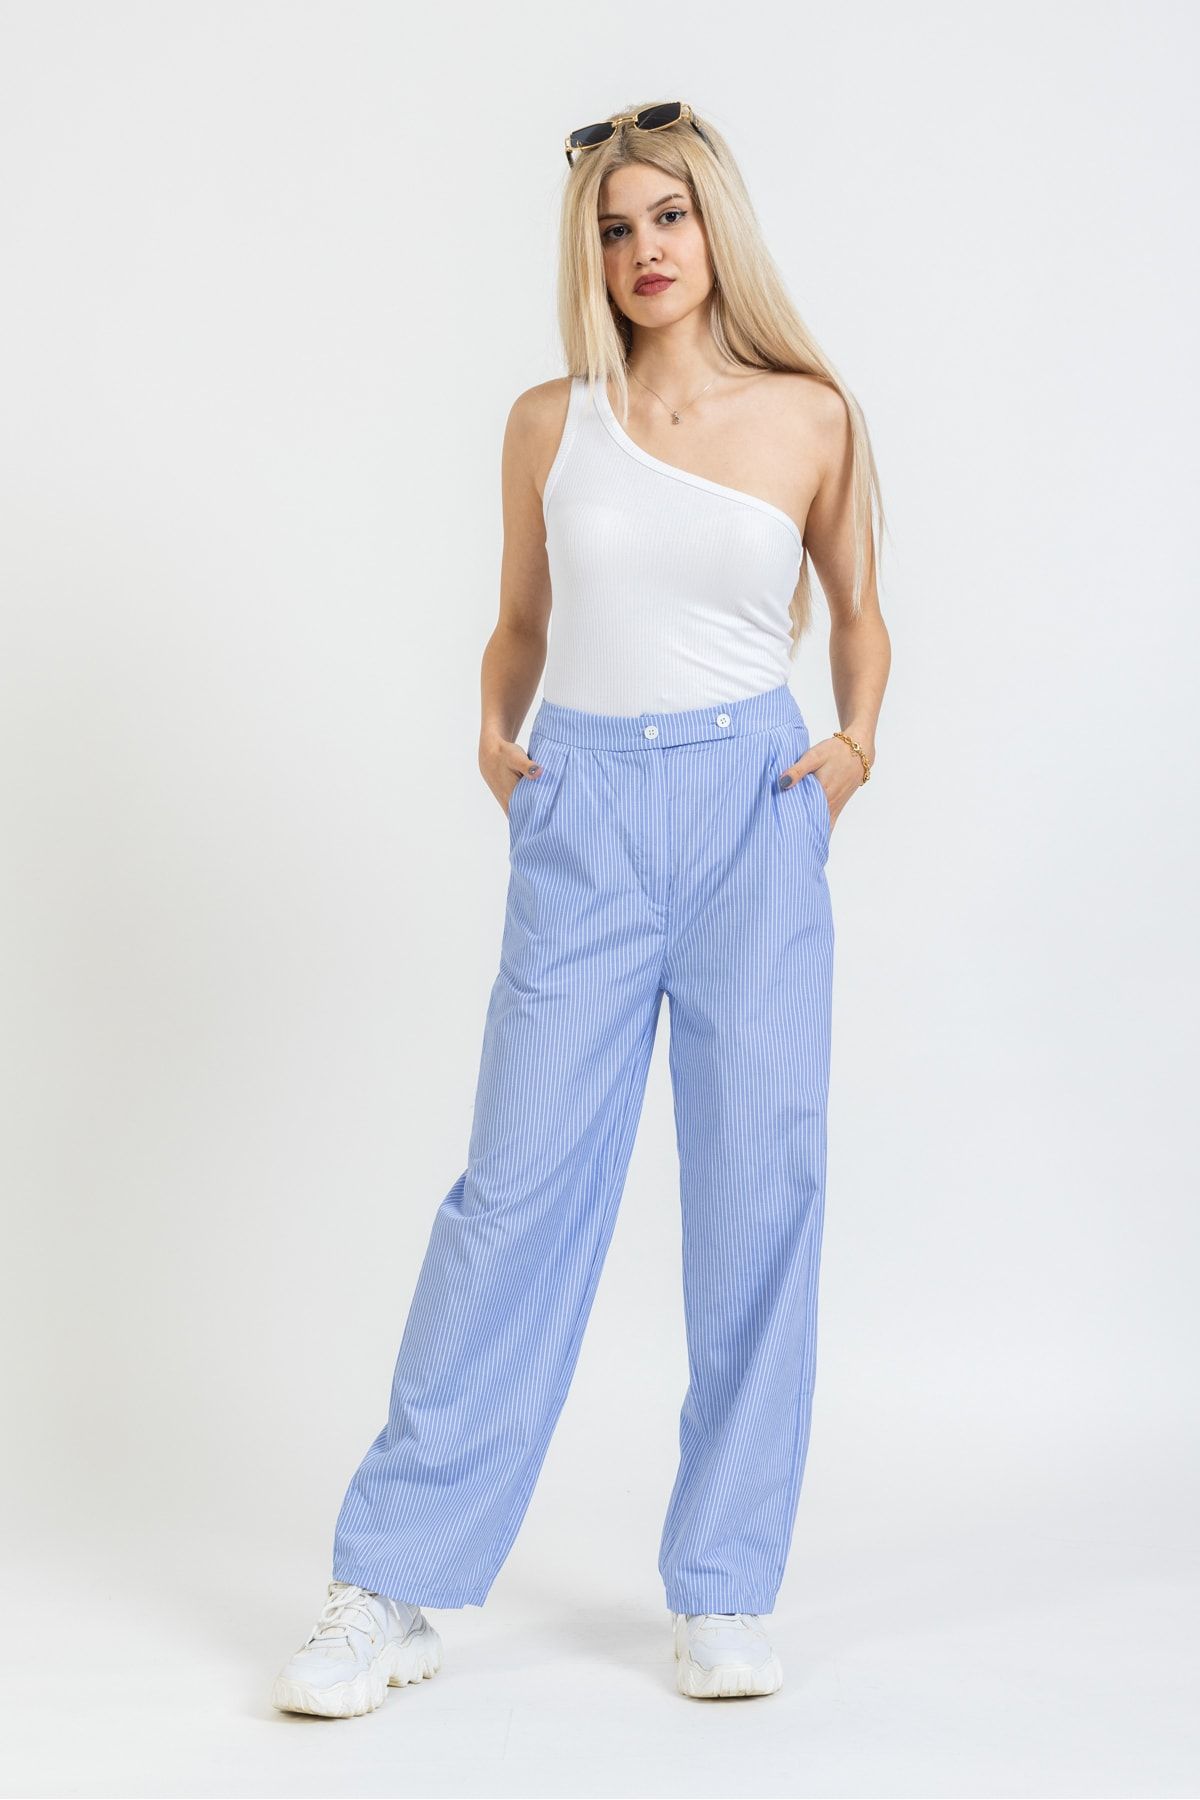 OlaFre Açık Mavi Çizgili Bol Paça Marina Pantolon, Bel Detaylı Uzun Pantolon, Trend Pantolon